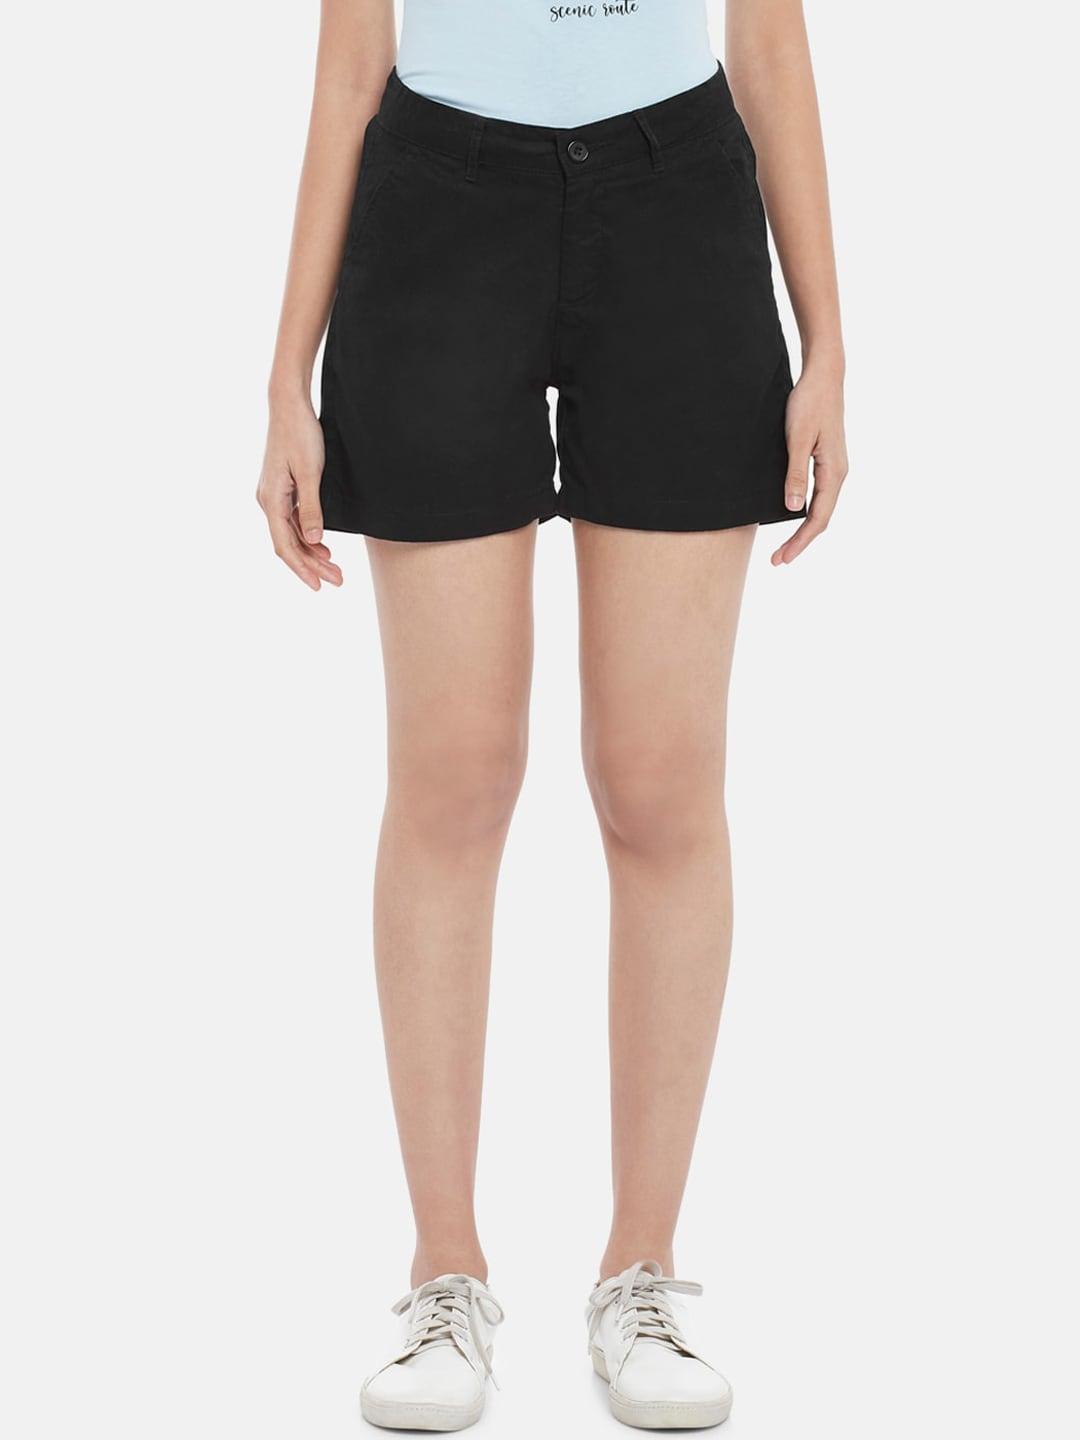 honey-by-pantaloons-women-black-solid-shorts